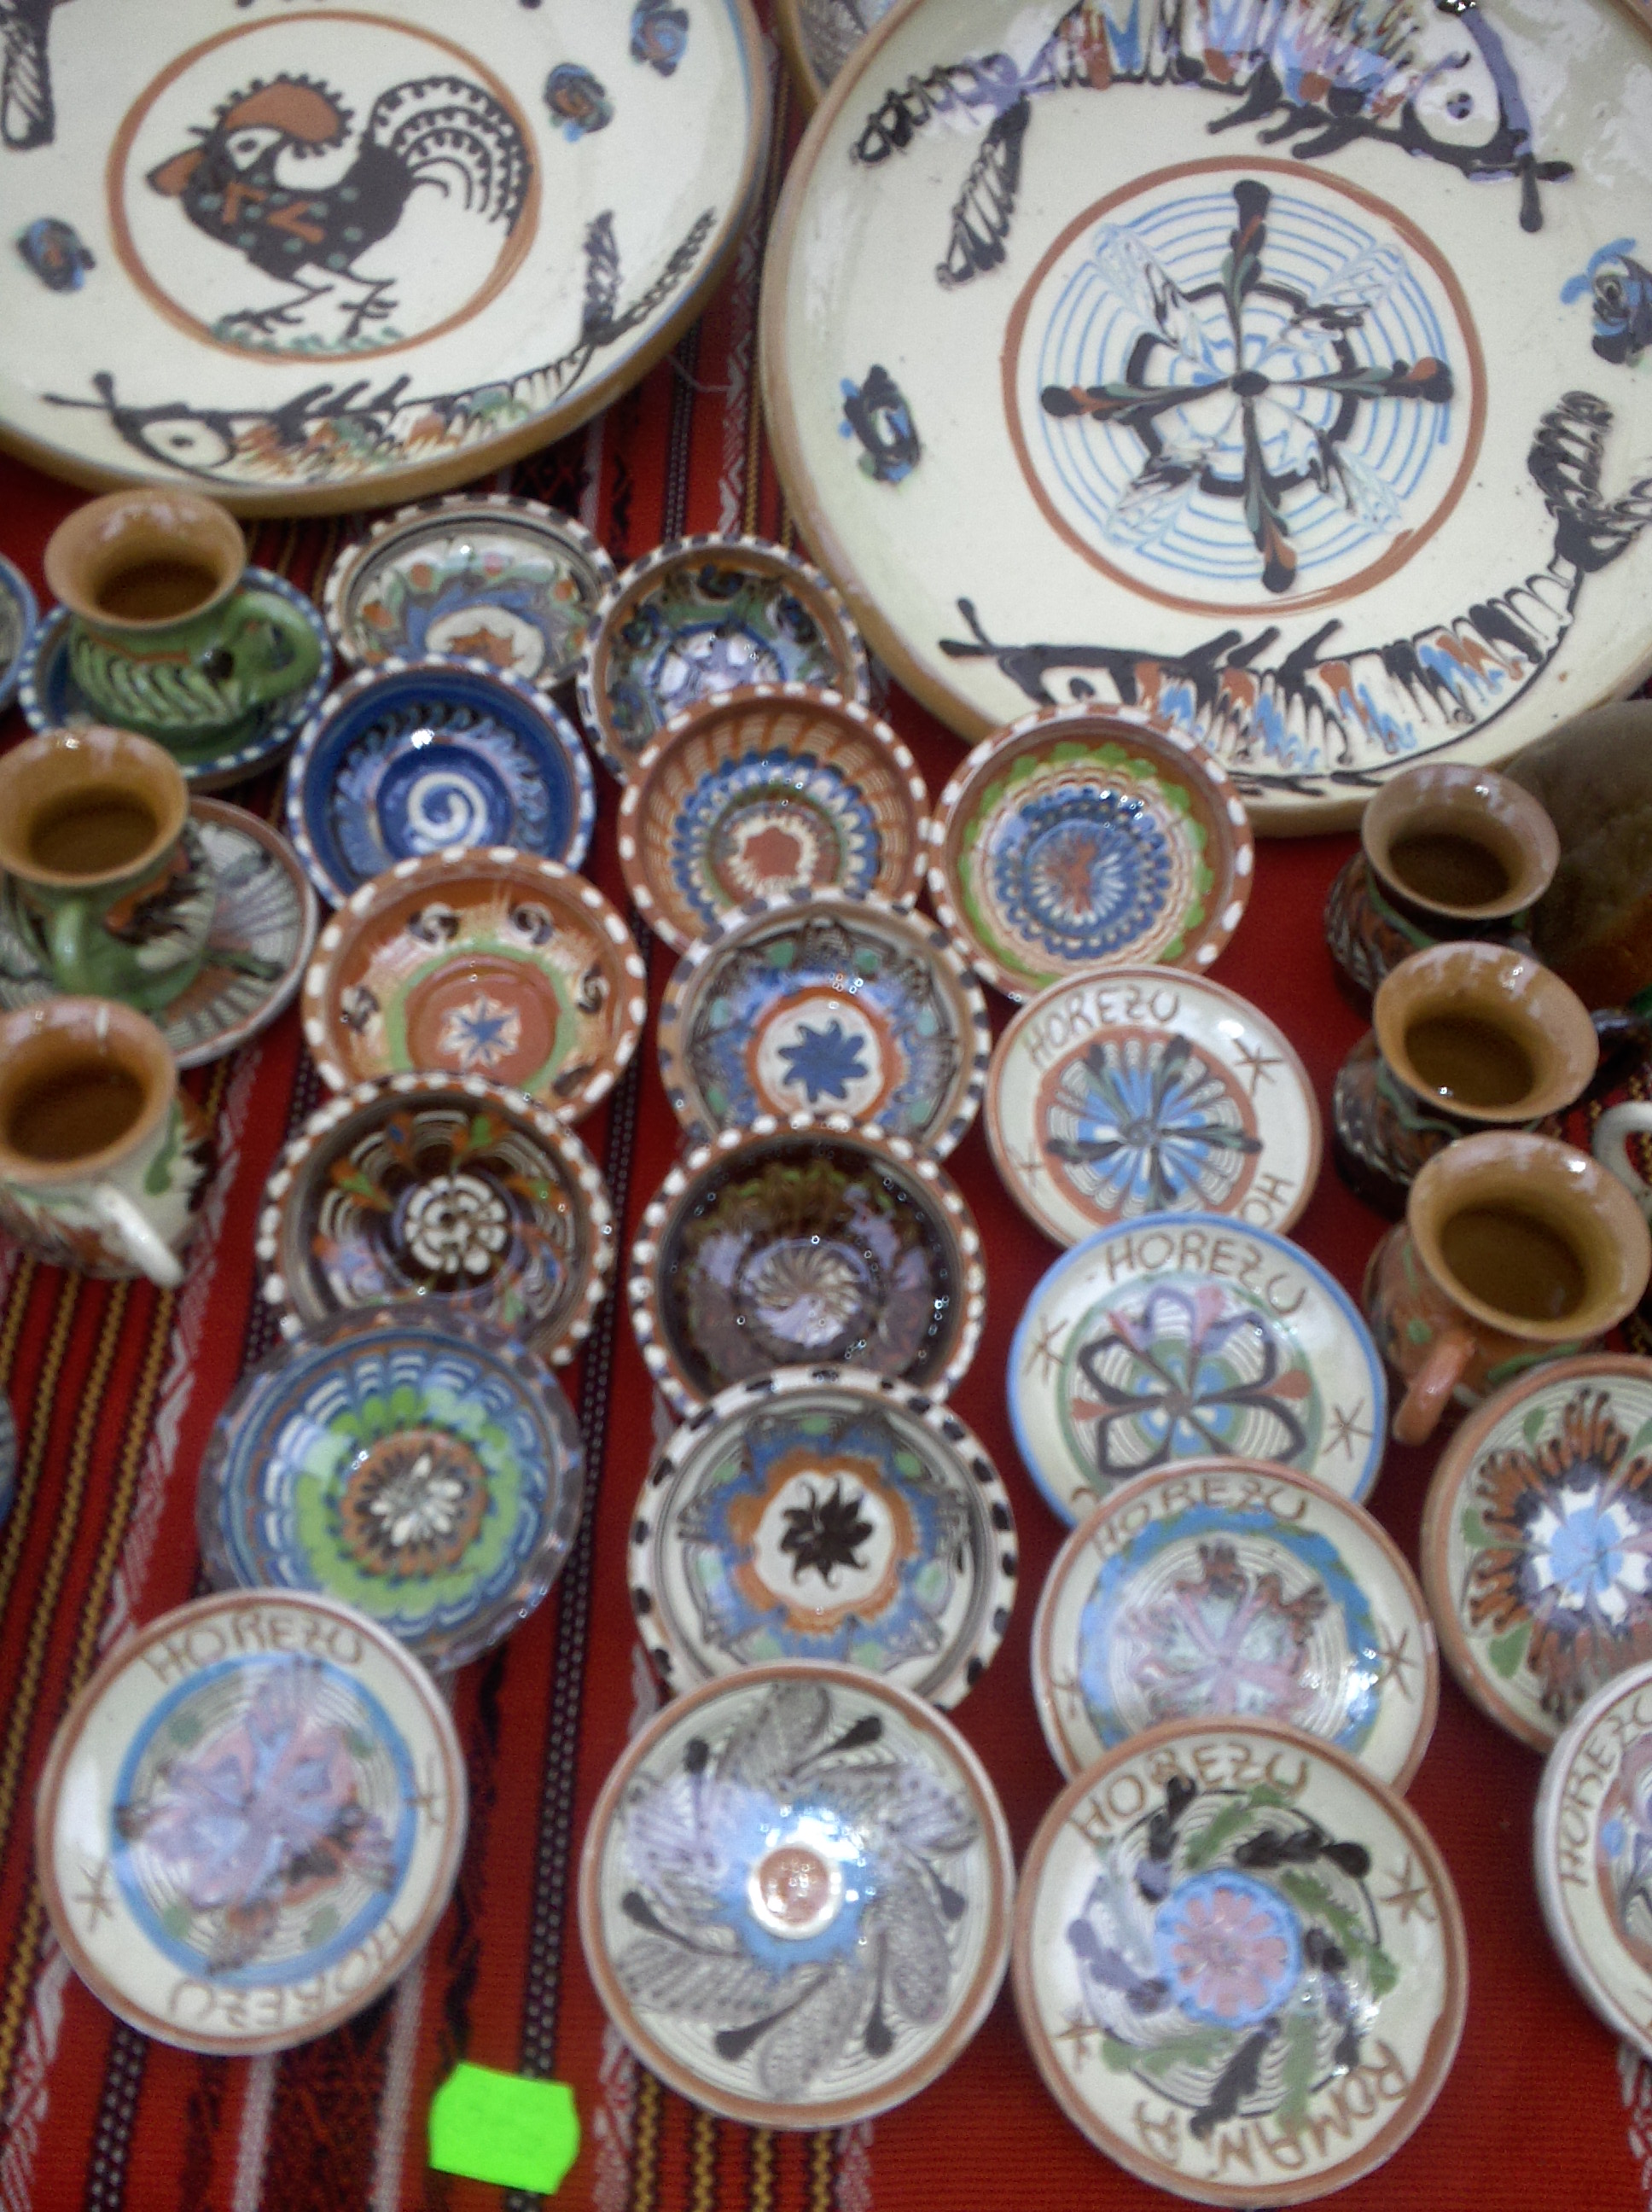 Horezu ceramics - Wikipedia